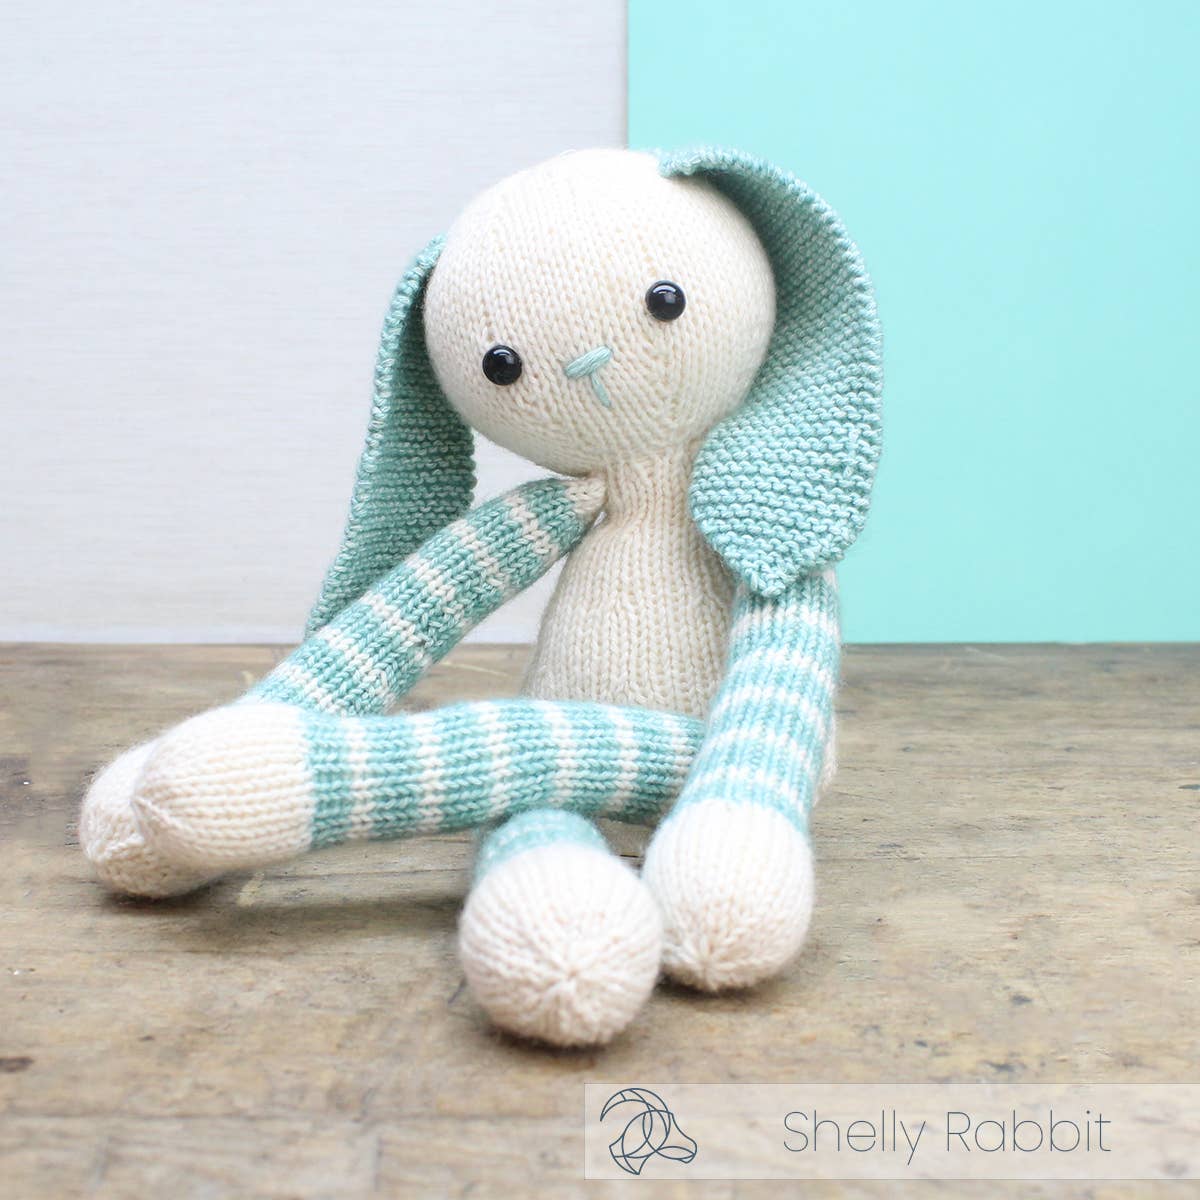 Hardicraft - Shelly Rabbit - Knitting Kit